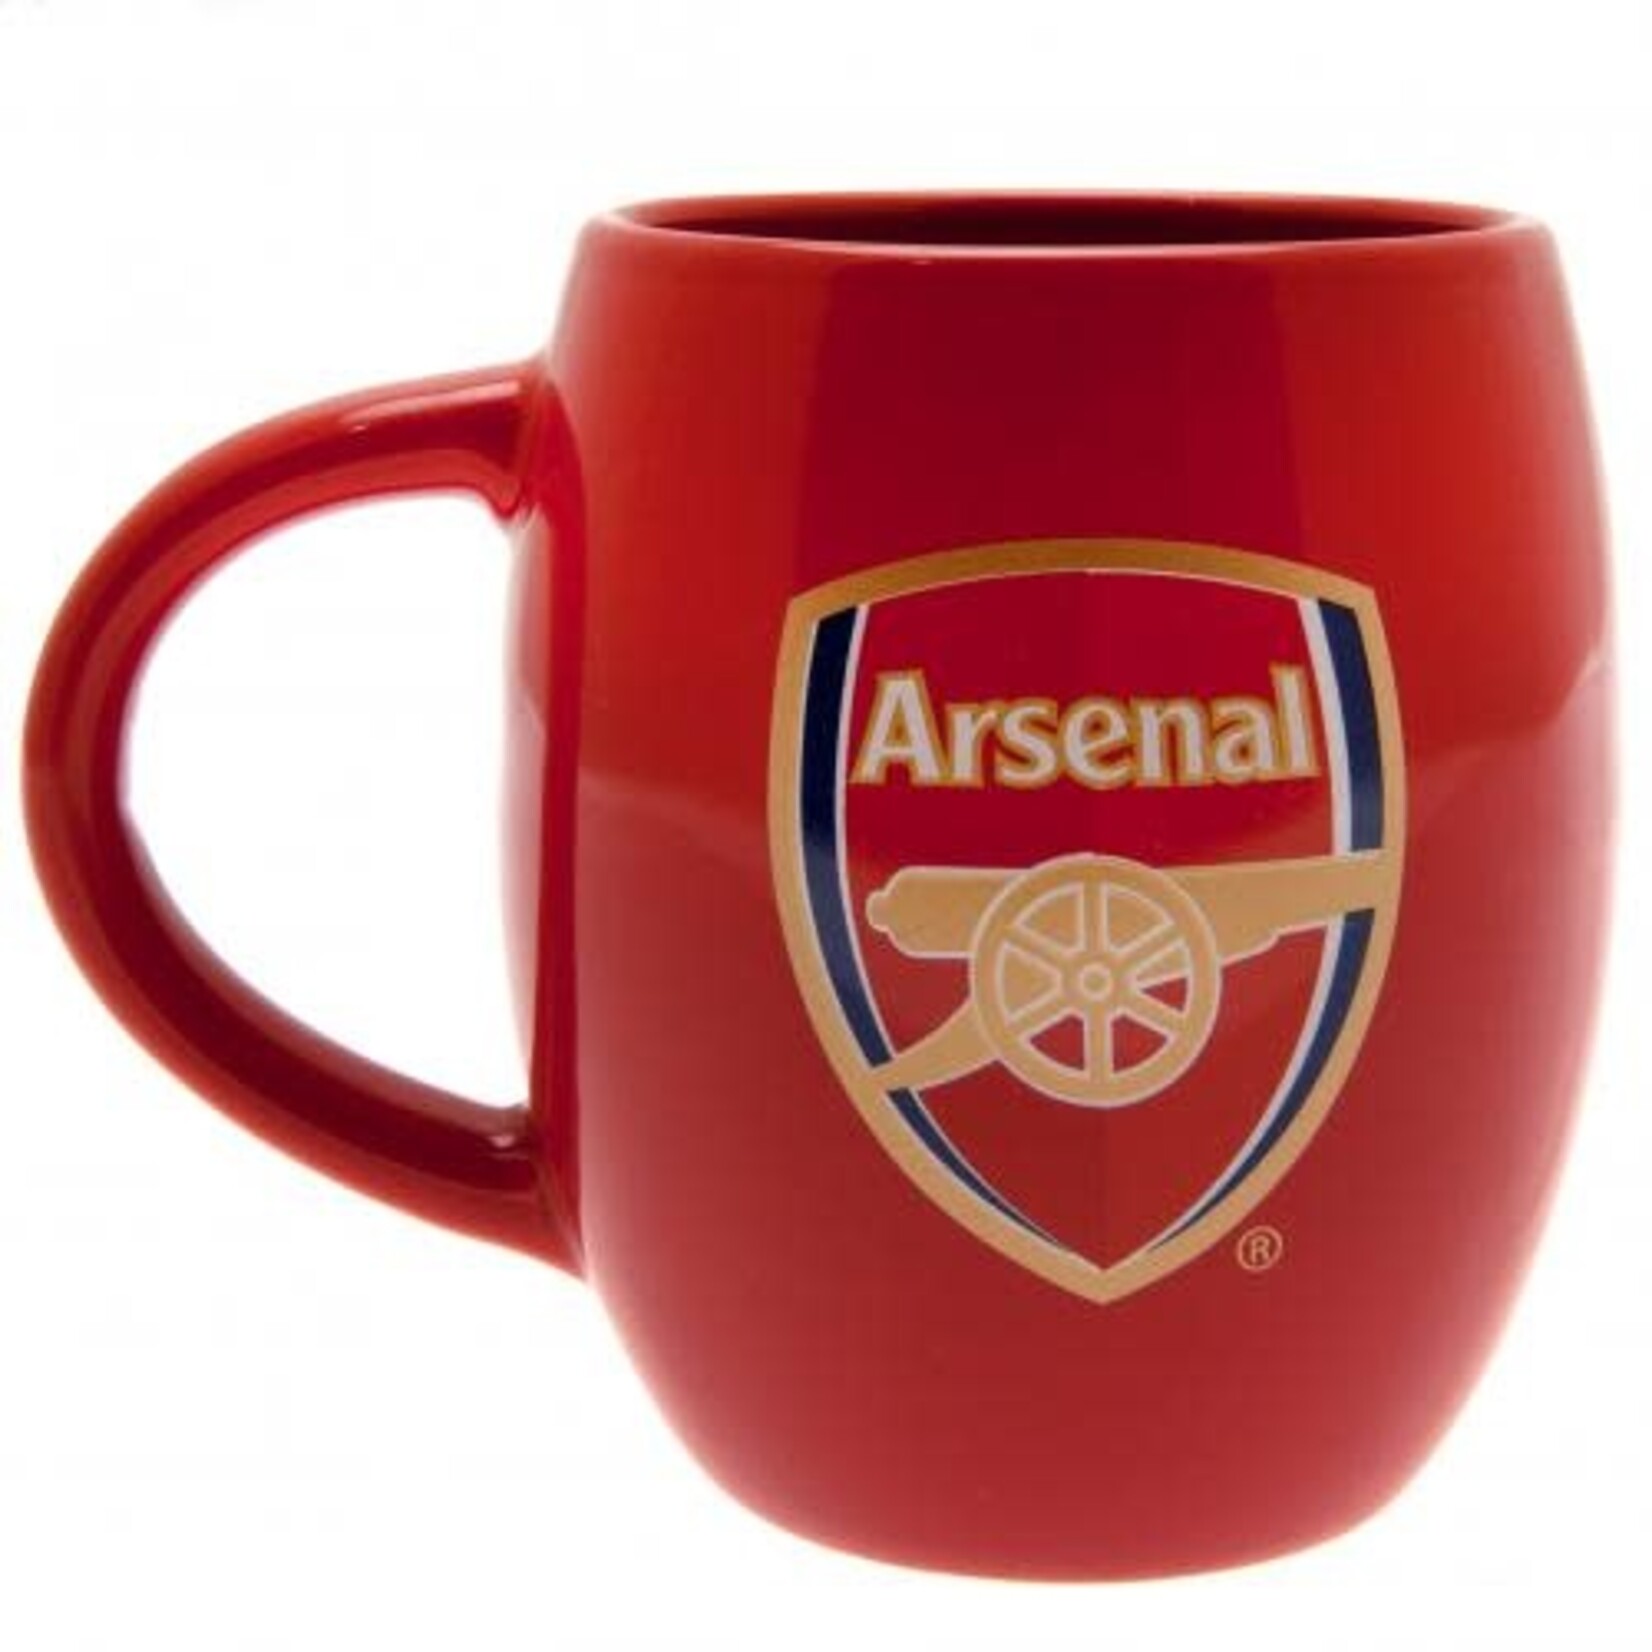 Mimi Imports Arsenal Tea Tub Mug